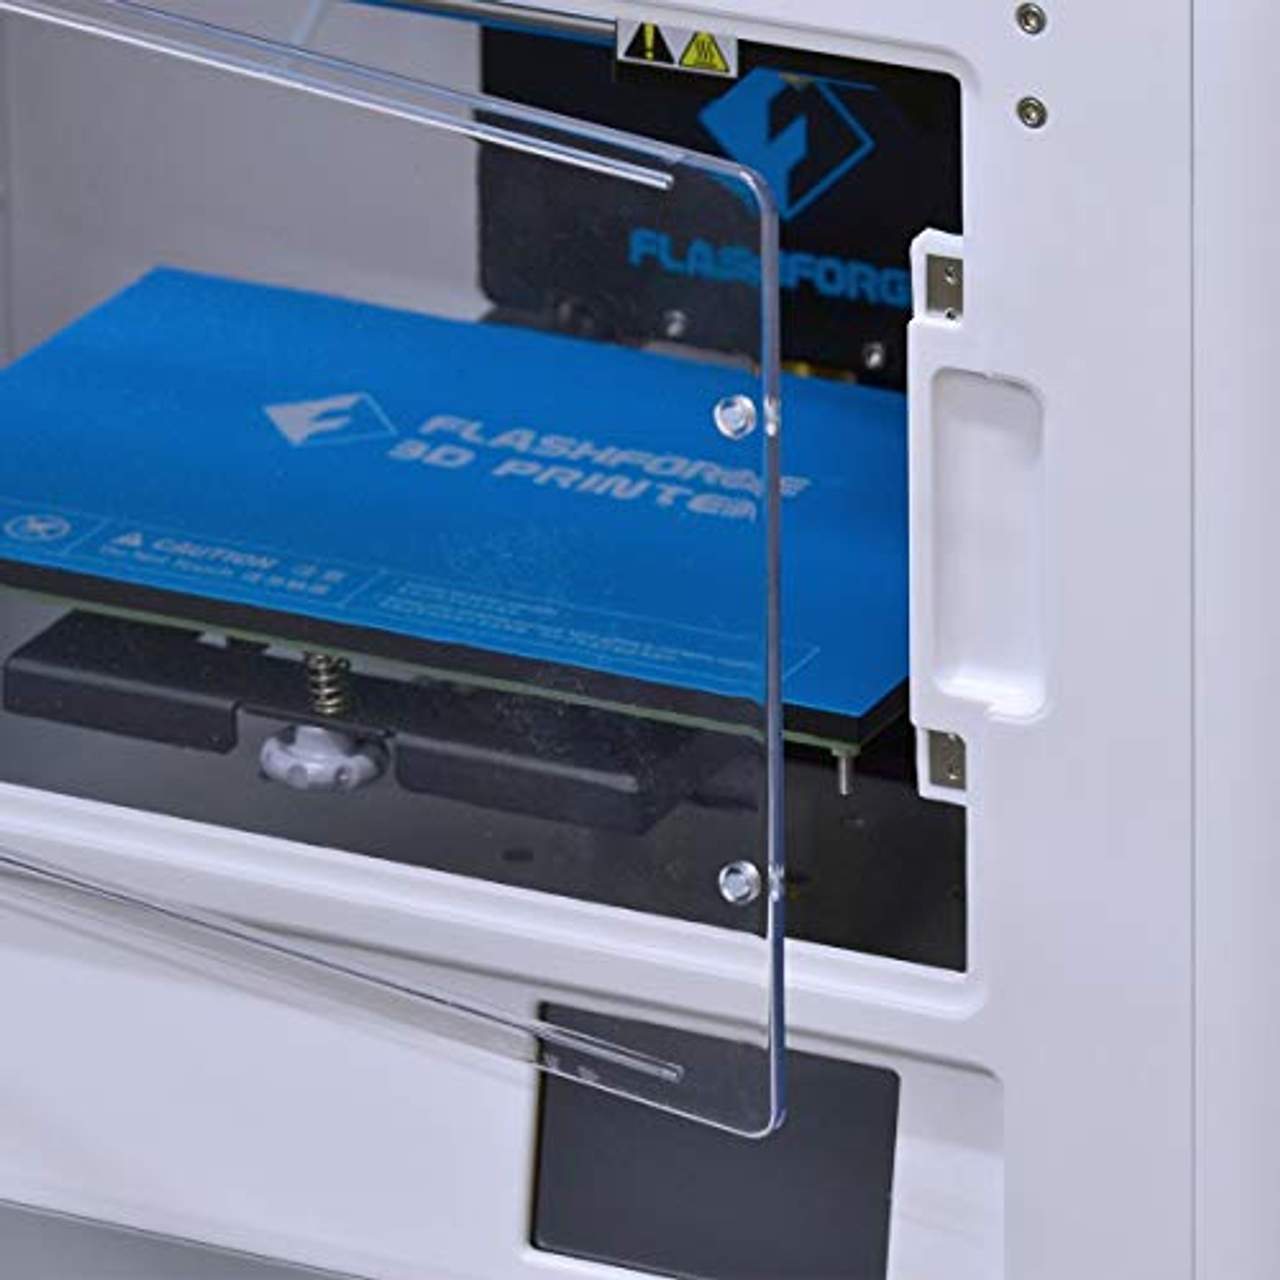 Flashforge Dreamer Dual Extruder 3D Printer